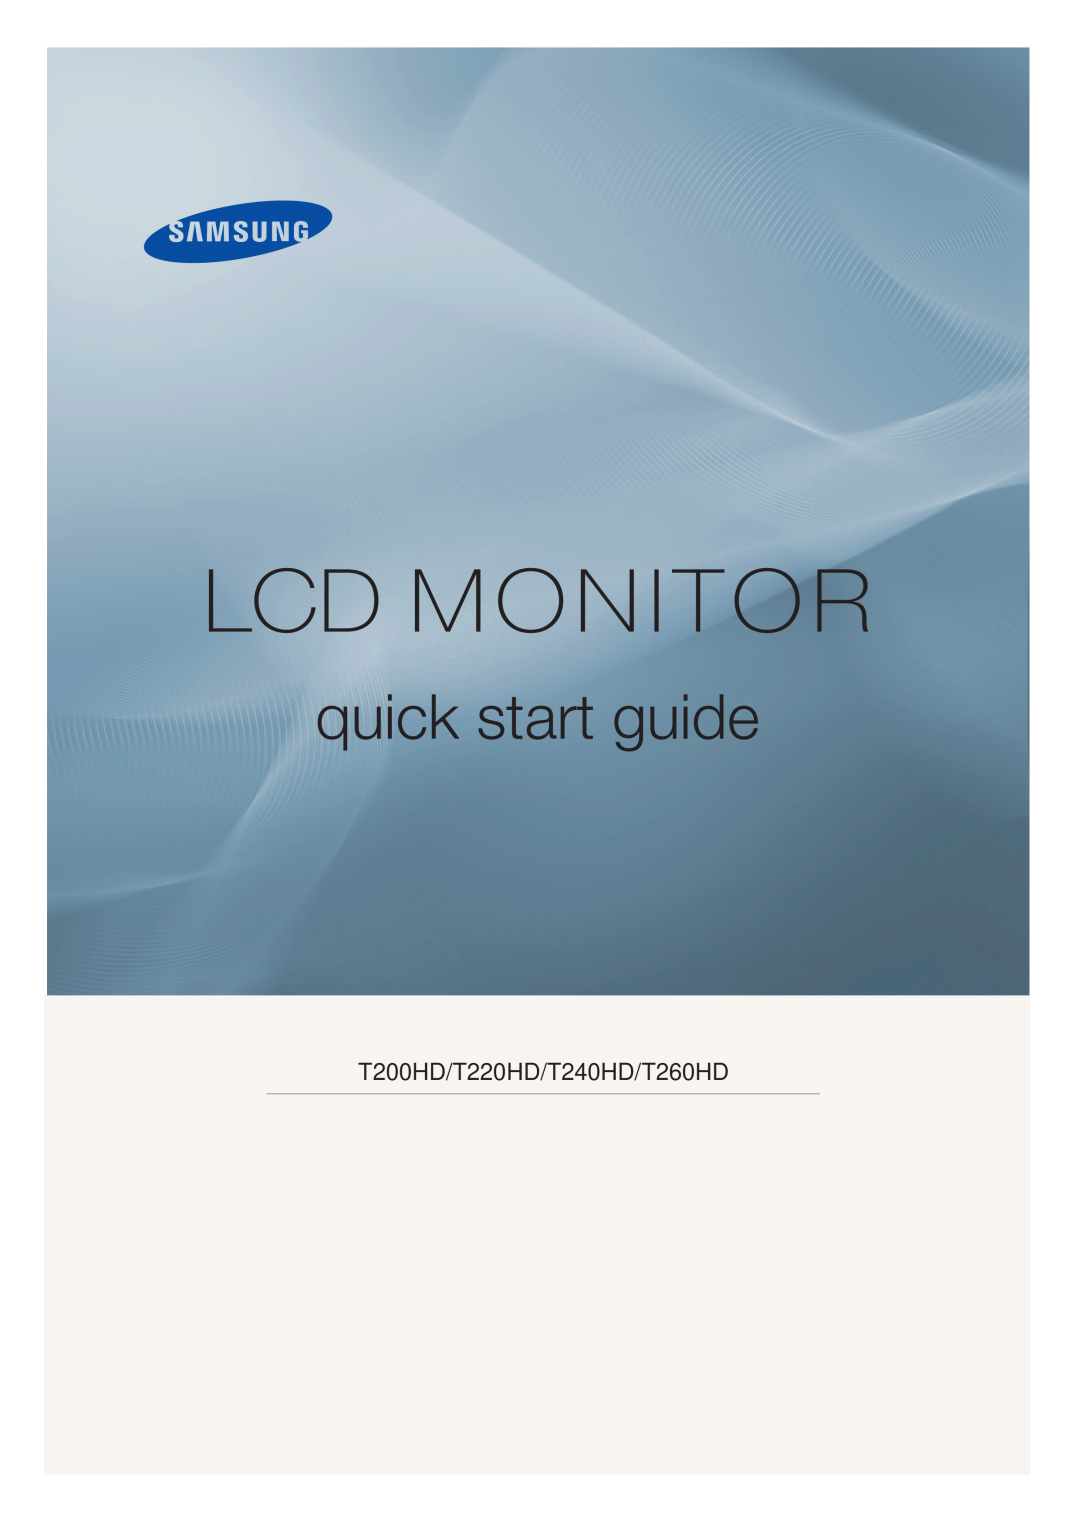 Samsung LS22TDVSUV/EN, LS20TDVSUV/EN, LS20TDDSUV/EN, LS22TDDSUV/EN manual Lcd Monitor, quick start guide, T200HD, T220HD 